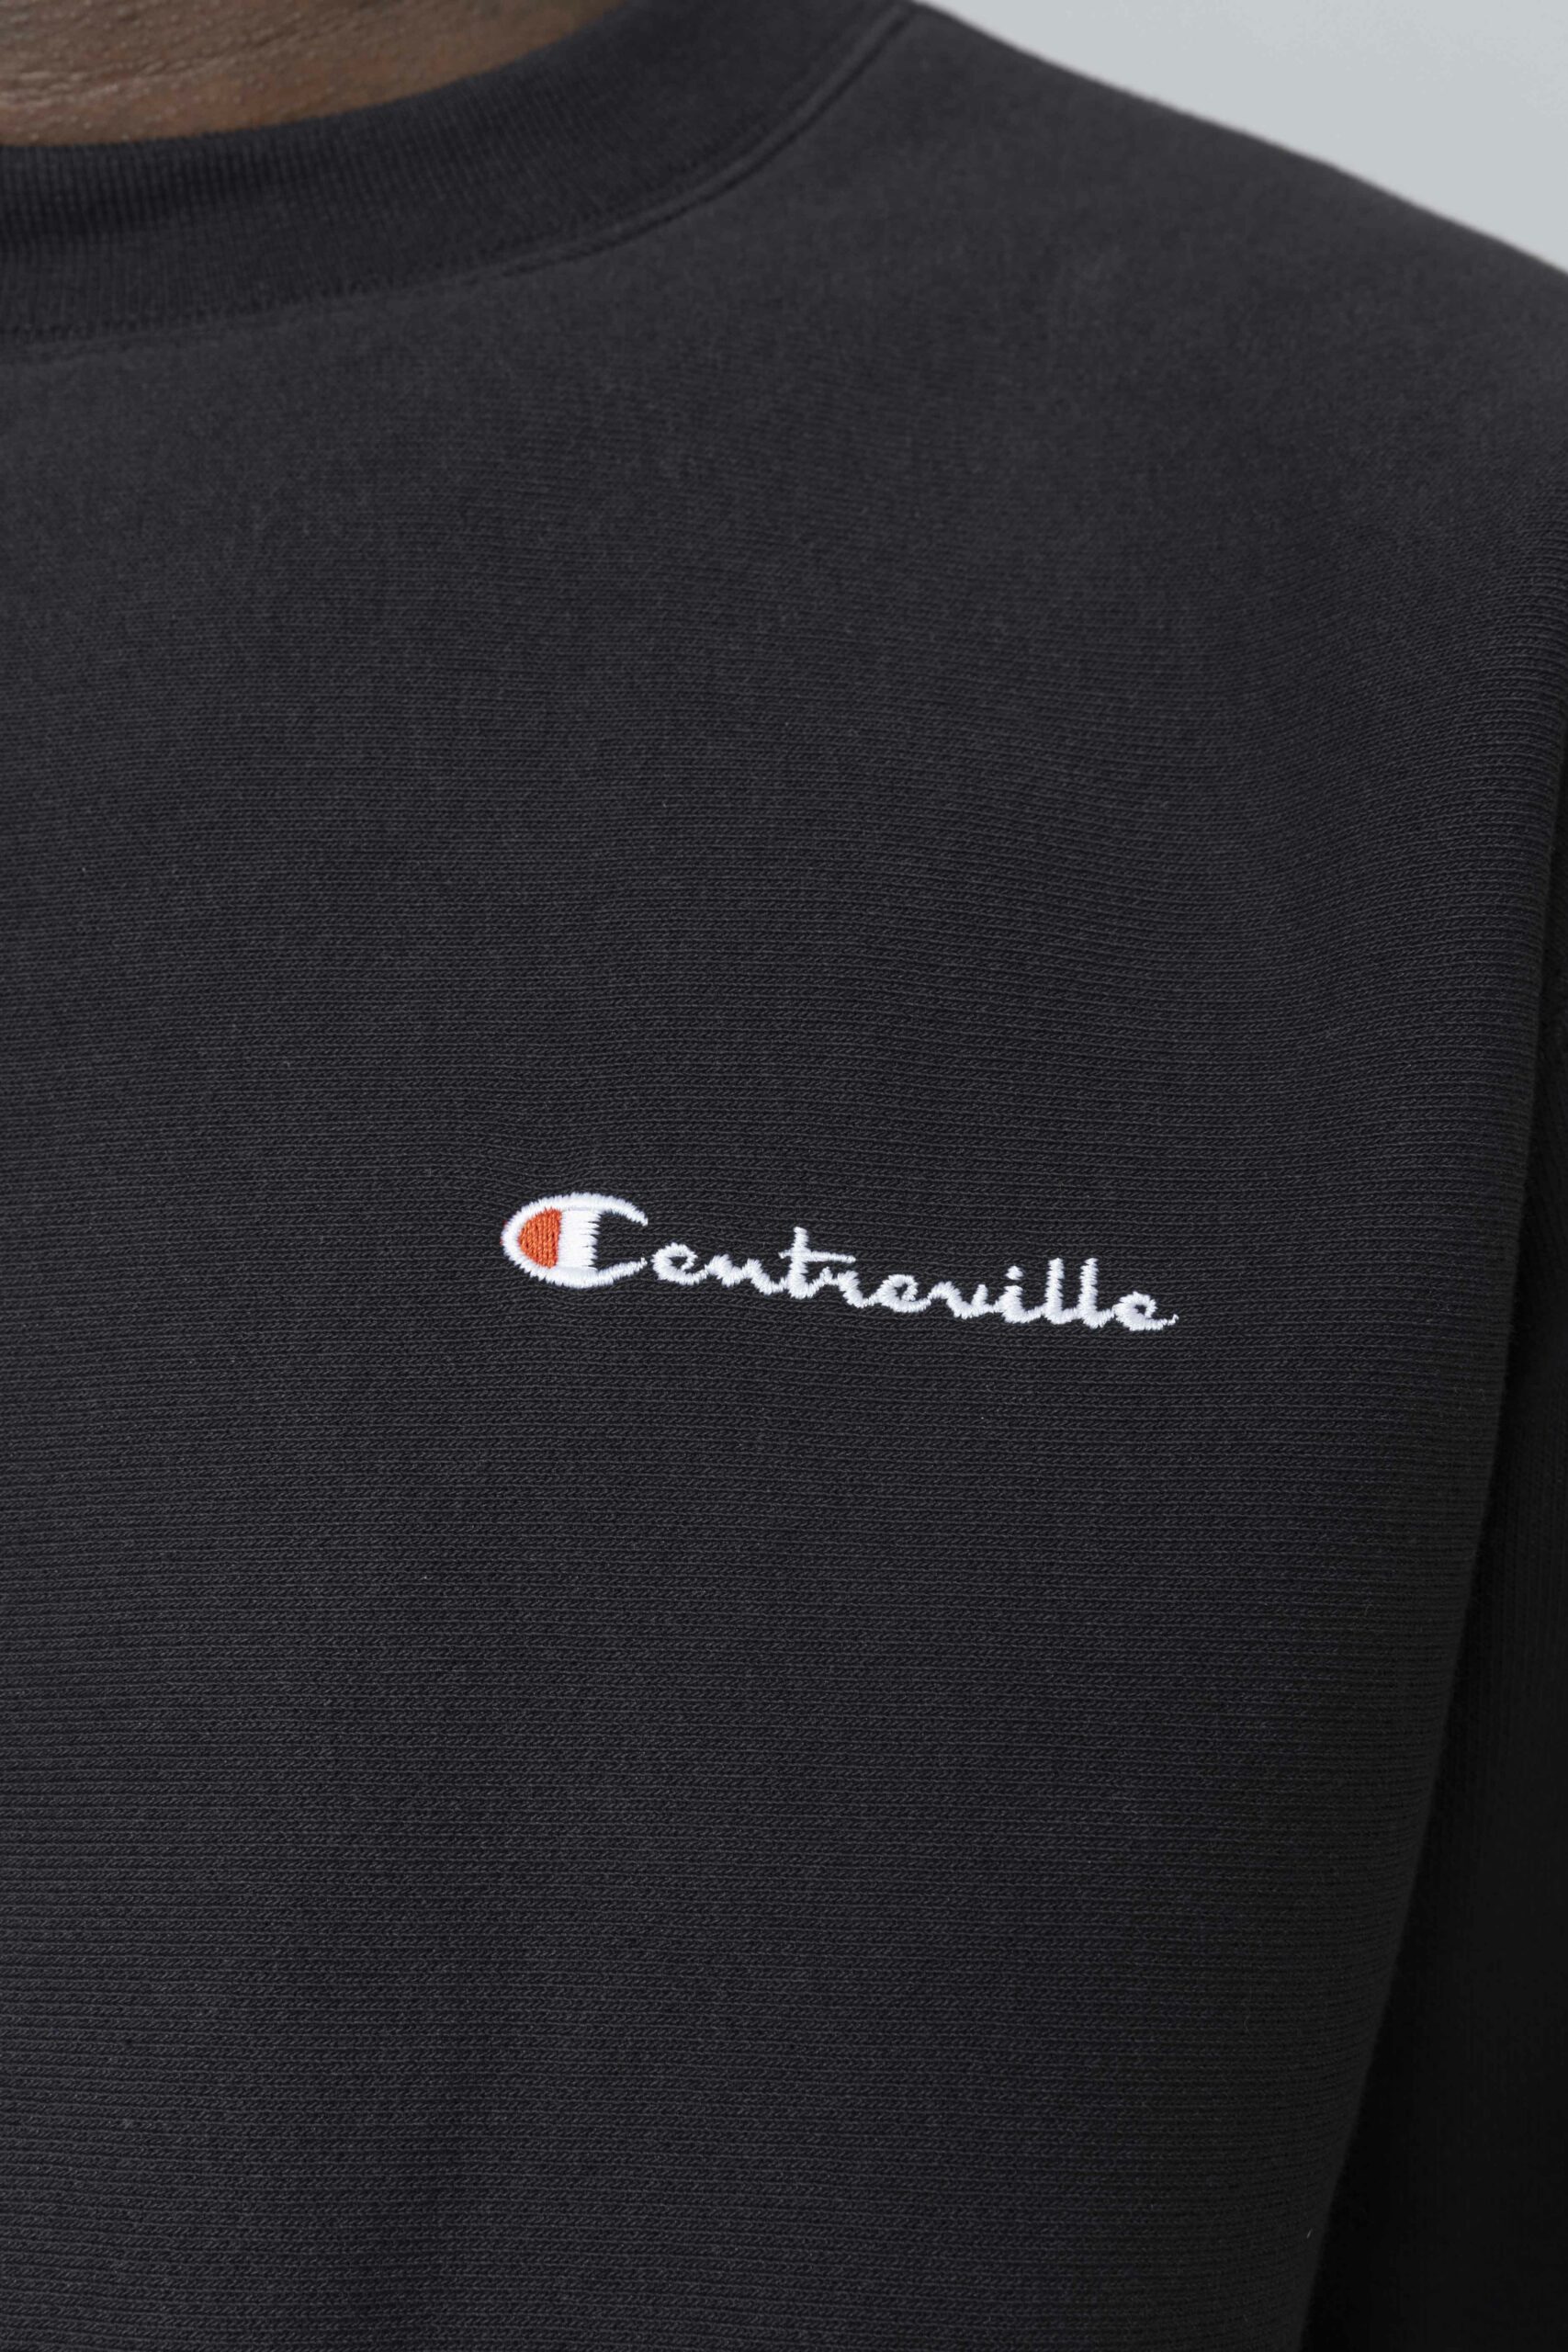 Champion Centreville Reverse Weave Sweatshirt Black